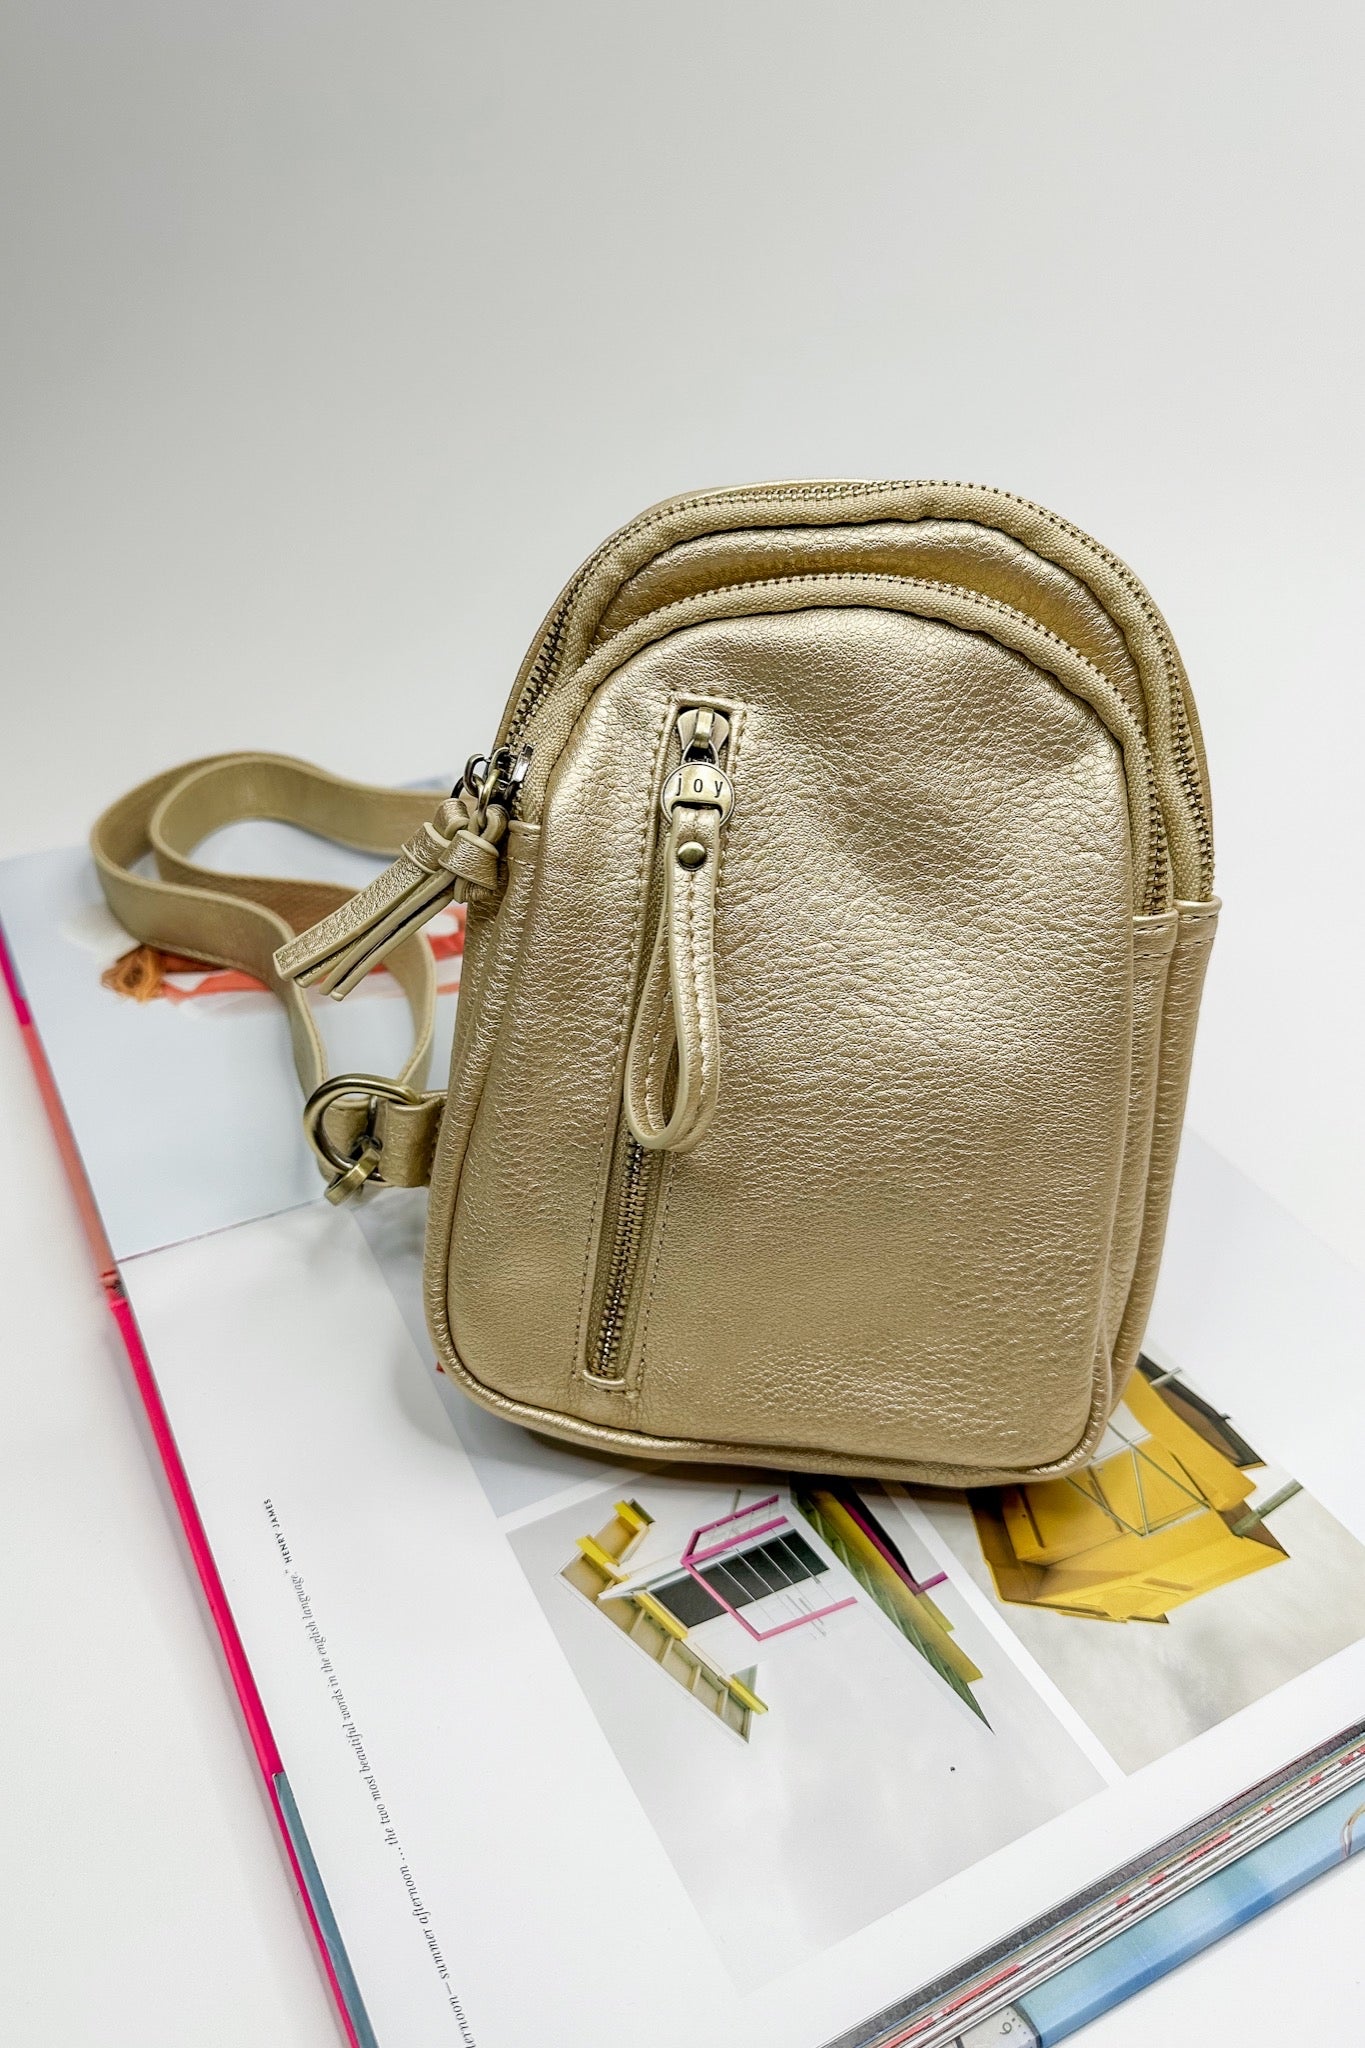 The Skyler Metallic Gold Sling Bag by Joy Susan